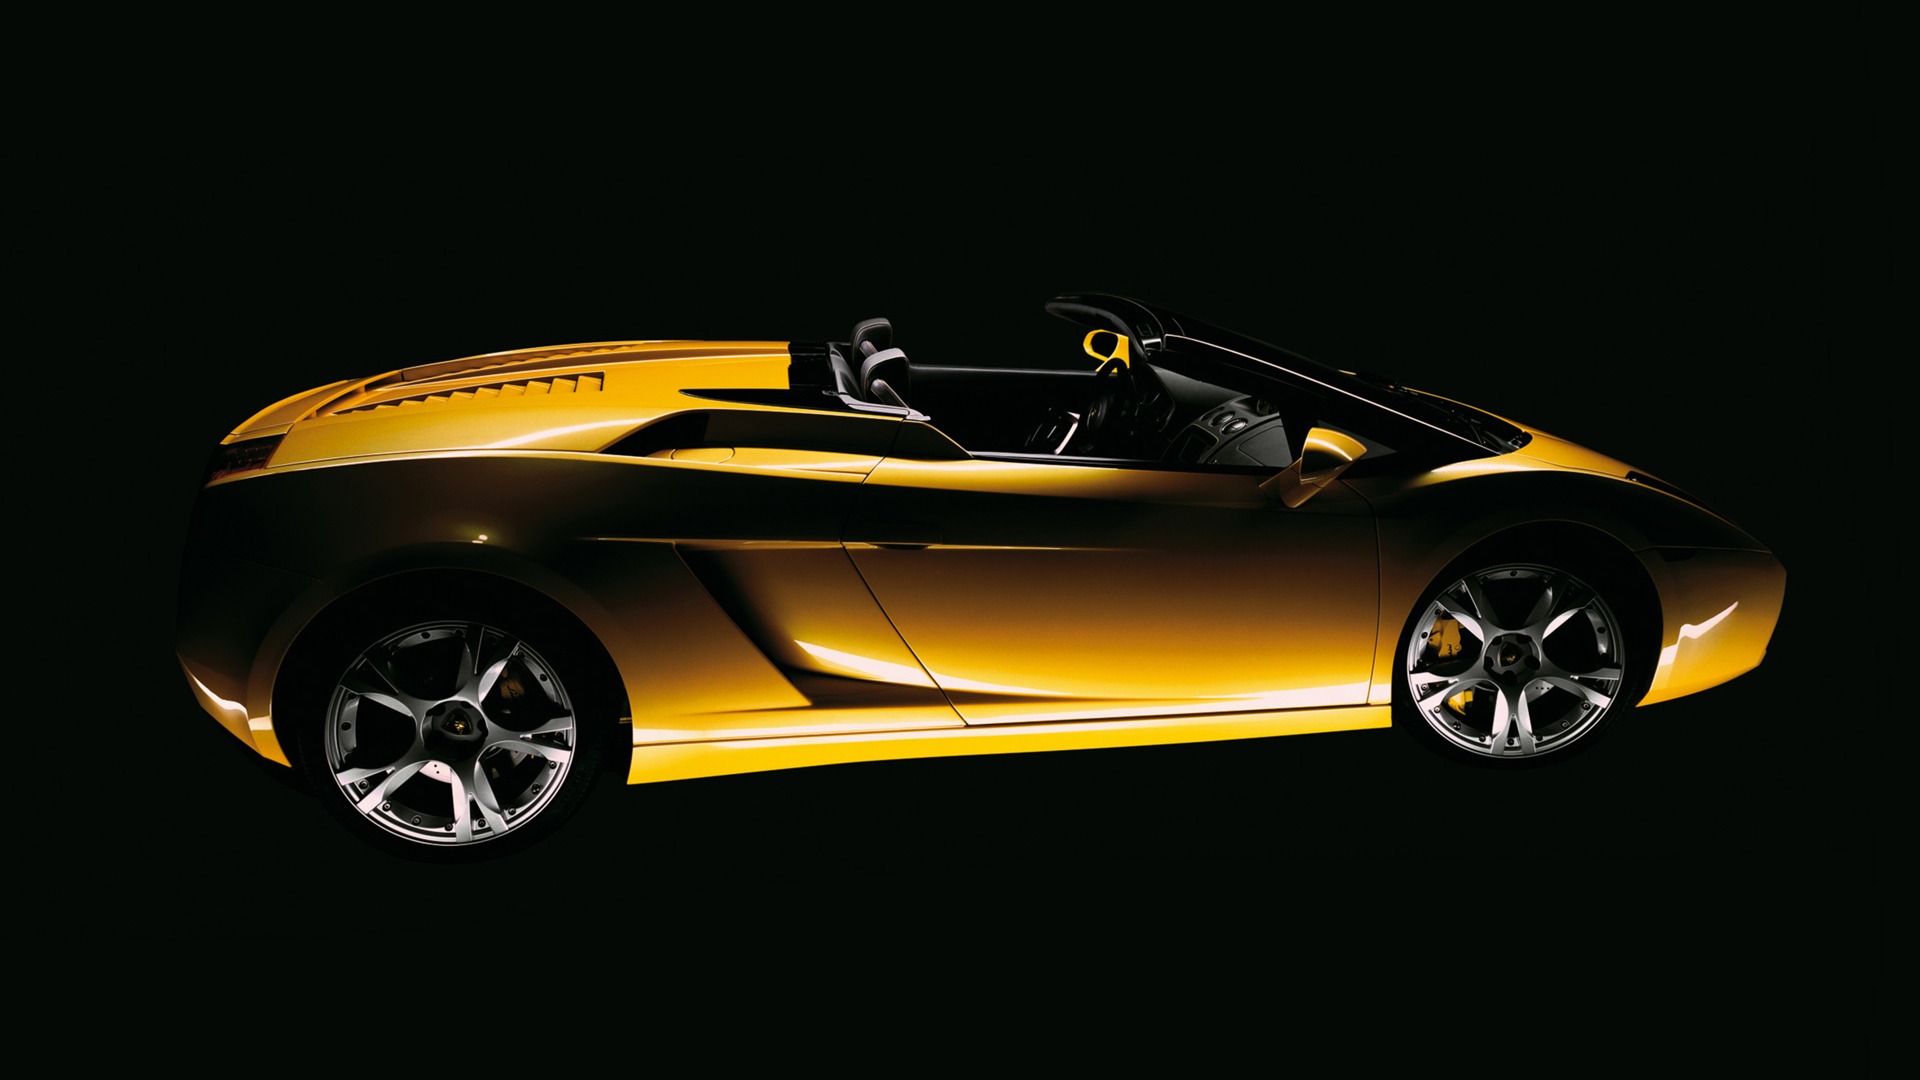 Lamborghini Gallardo Spyder - 2005 蘭博基尼 #2 - 1920x1080